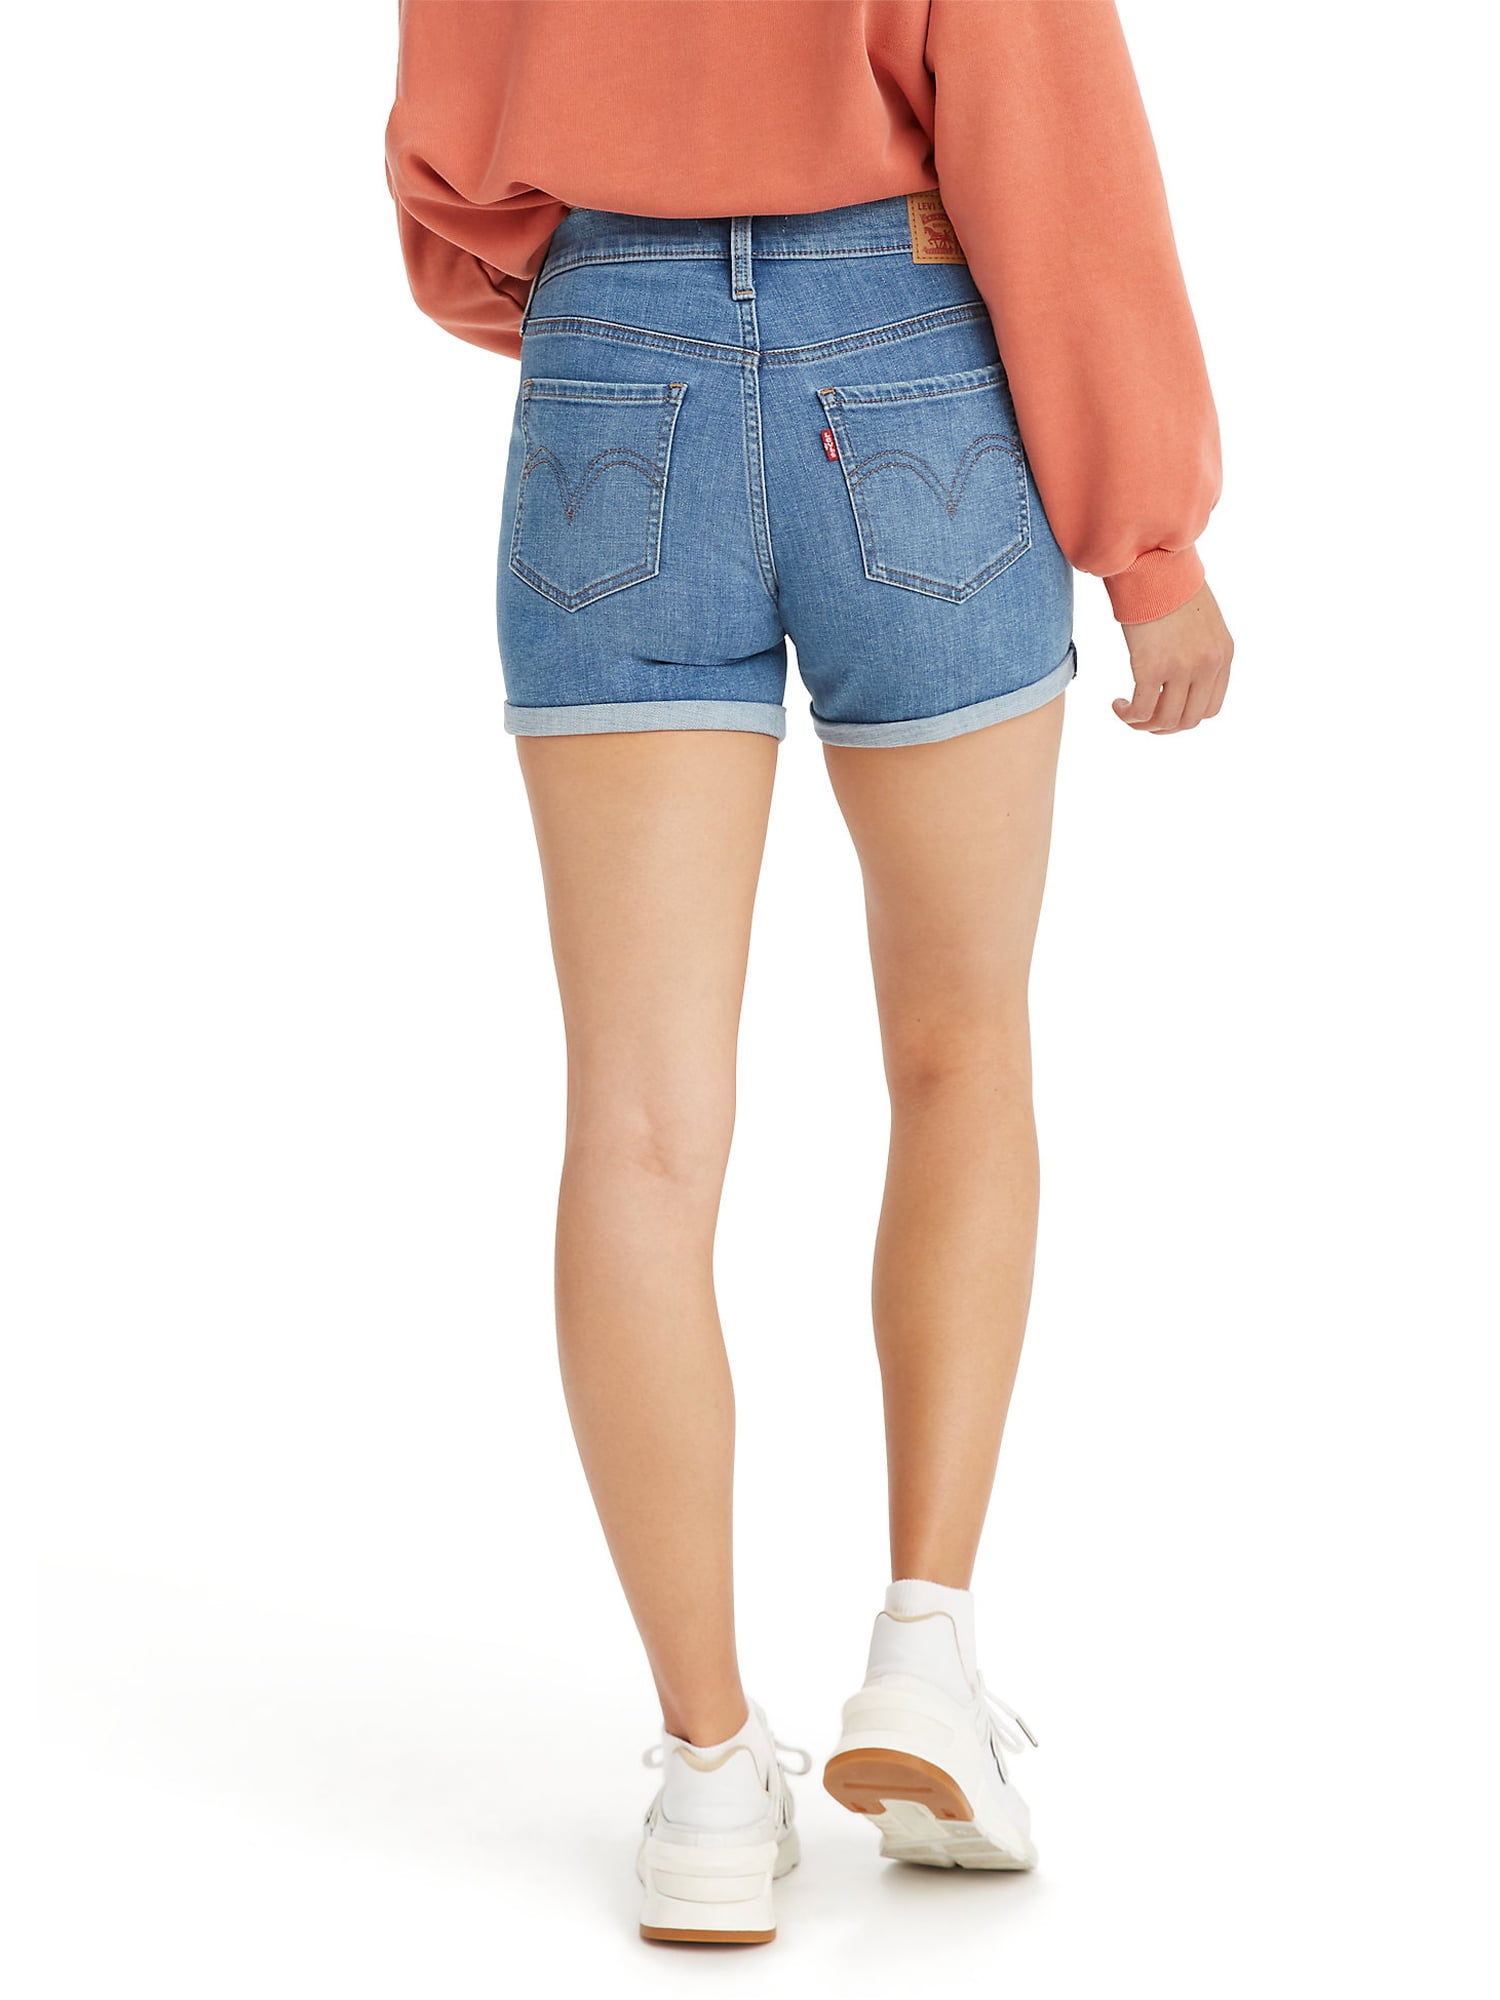 Levi's Original Red Tab Mid-Length Jean Shorts